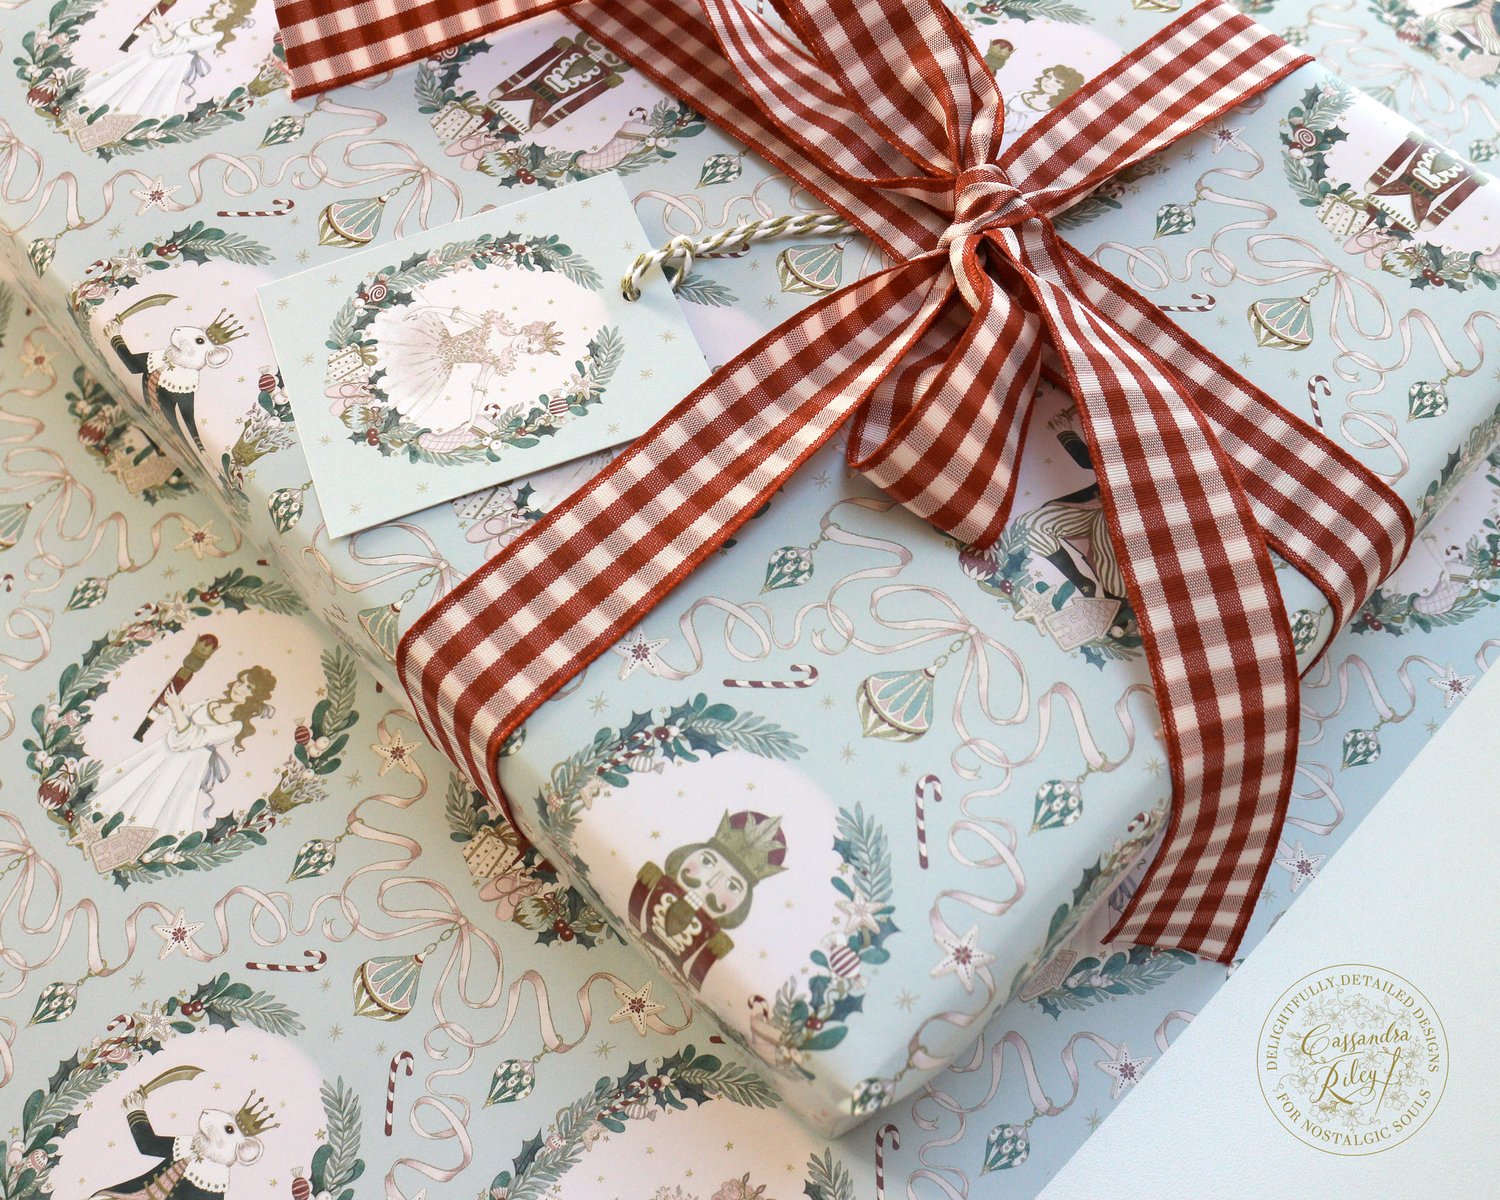 Vintage Winter Wonderland Printed Tissue Paper Gift Wrap Christmas